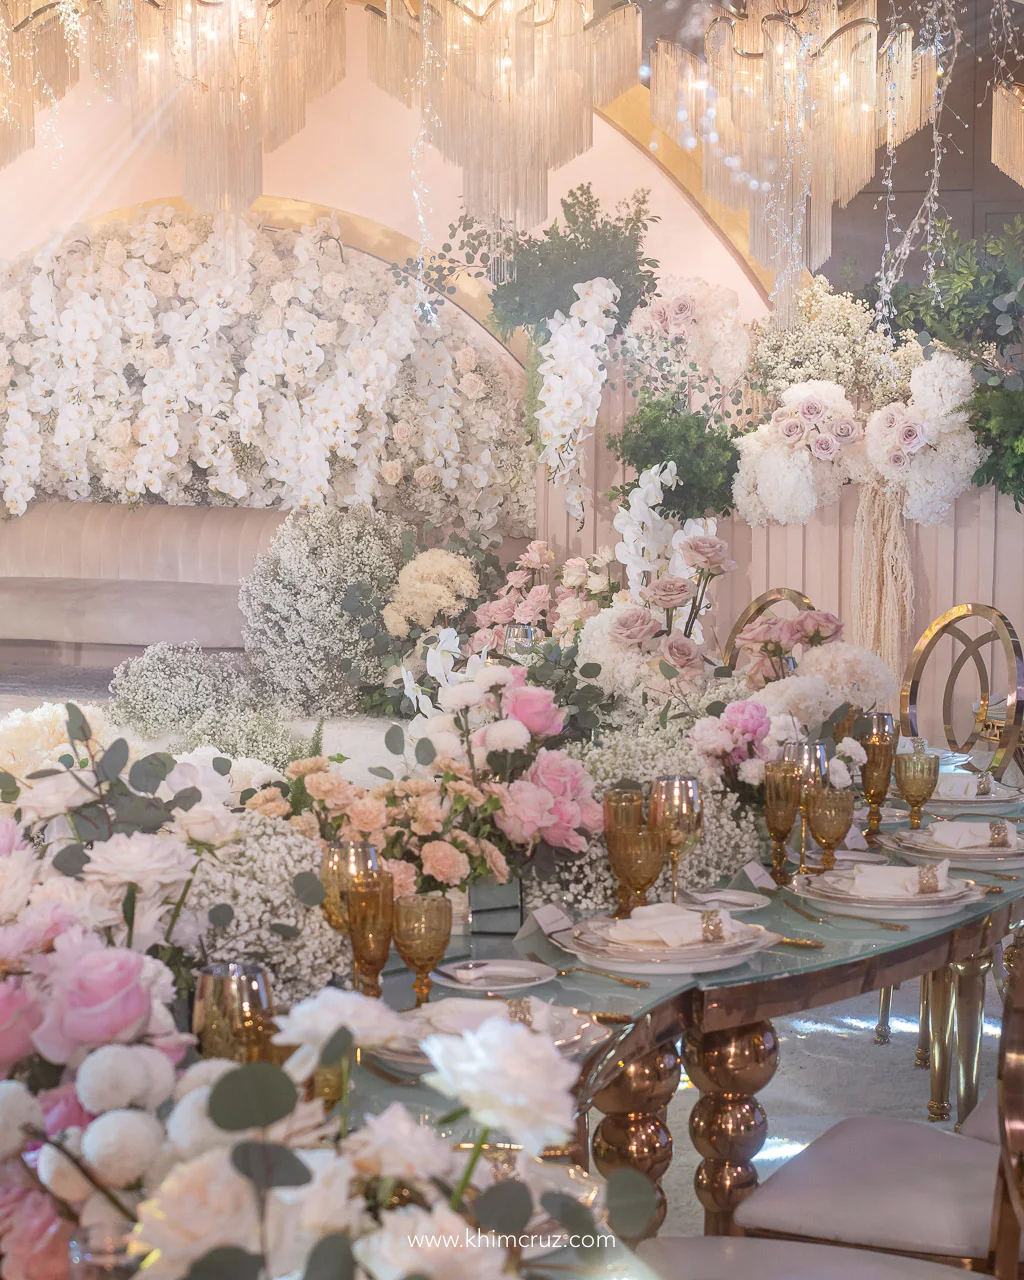 tablescape for a garden-inspired intimate wedding reception designed by event designer Khim Cruz